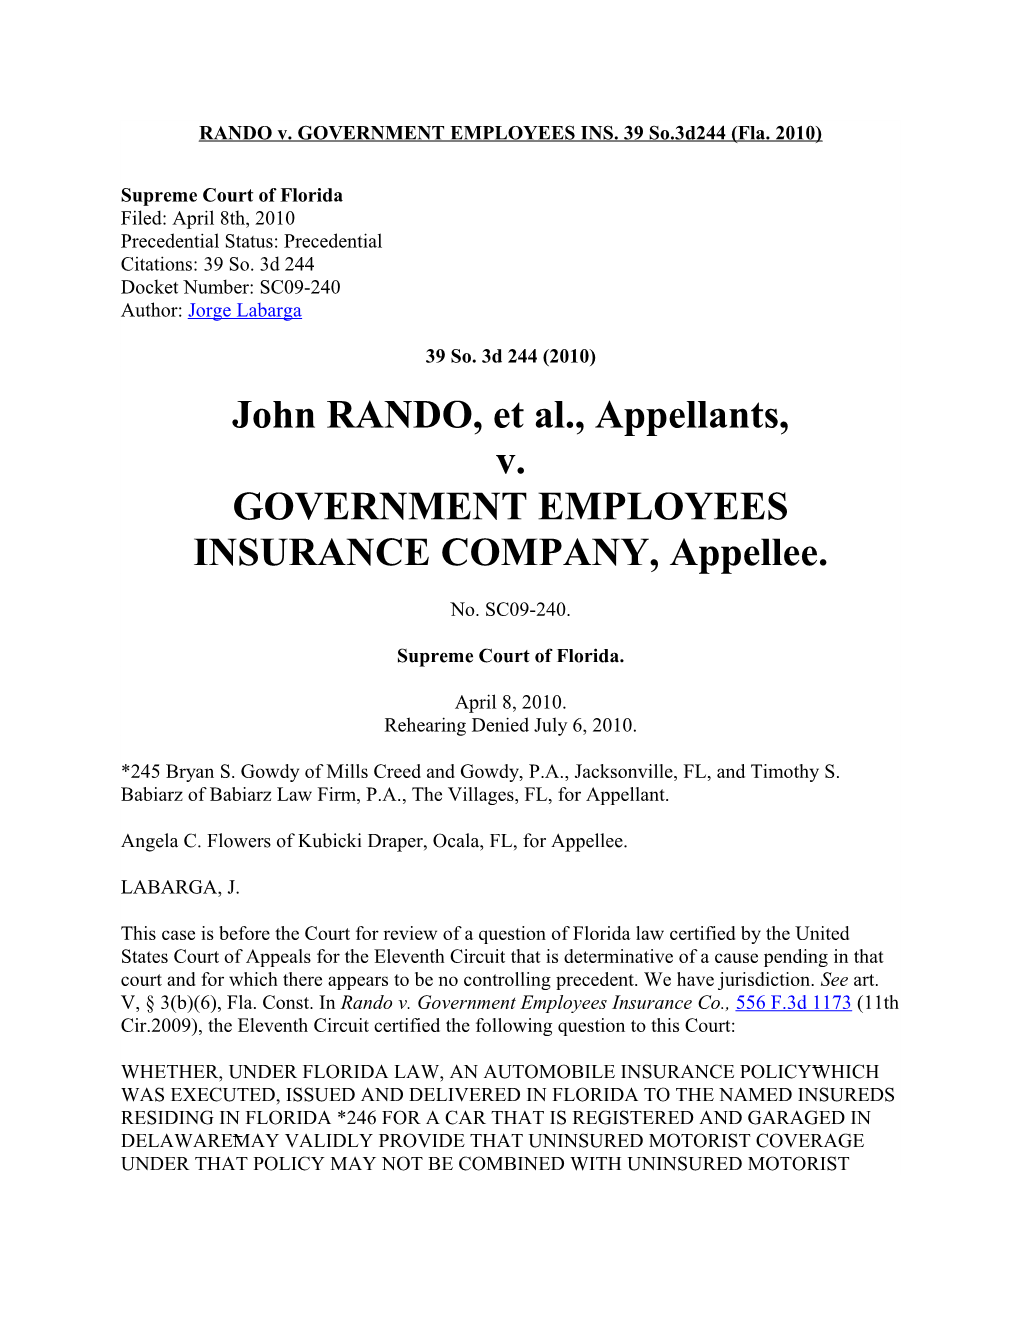 RANDO V. GOVERNMENT EMPLOYEES INS. 39 So.3D244 (Fla. 2010)